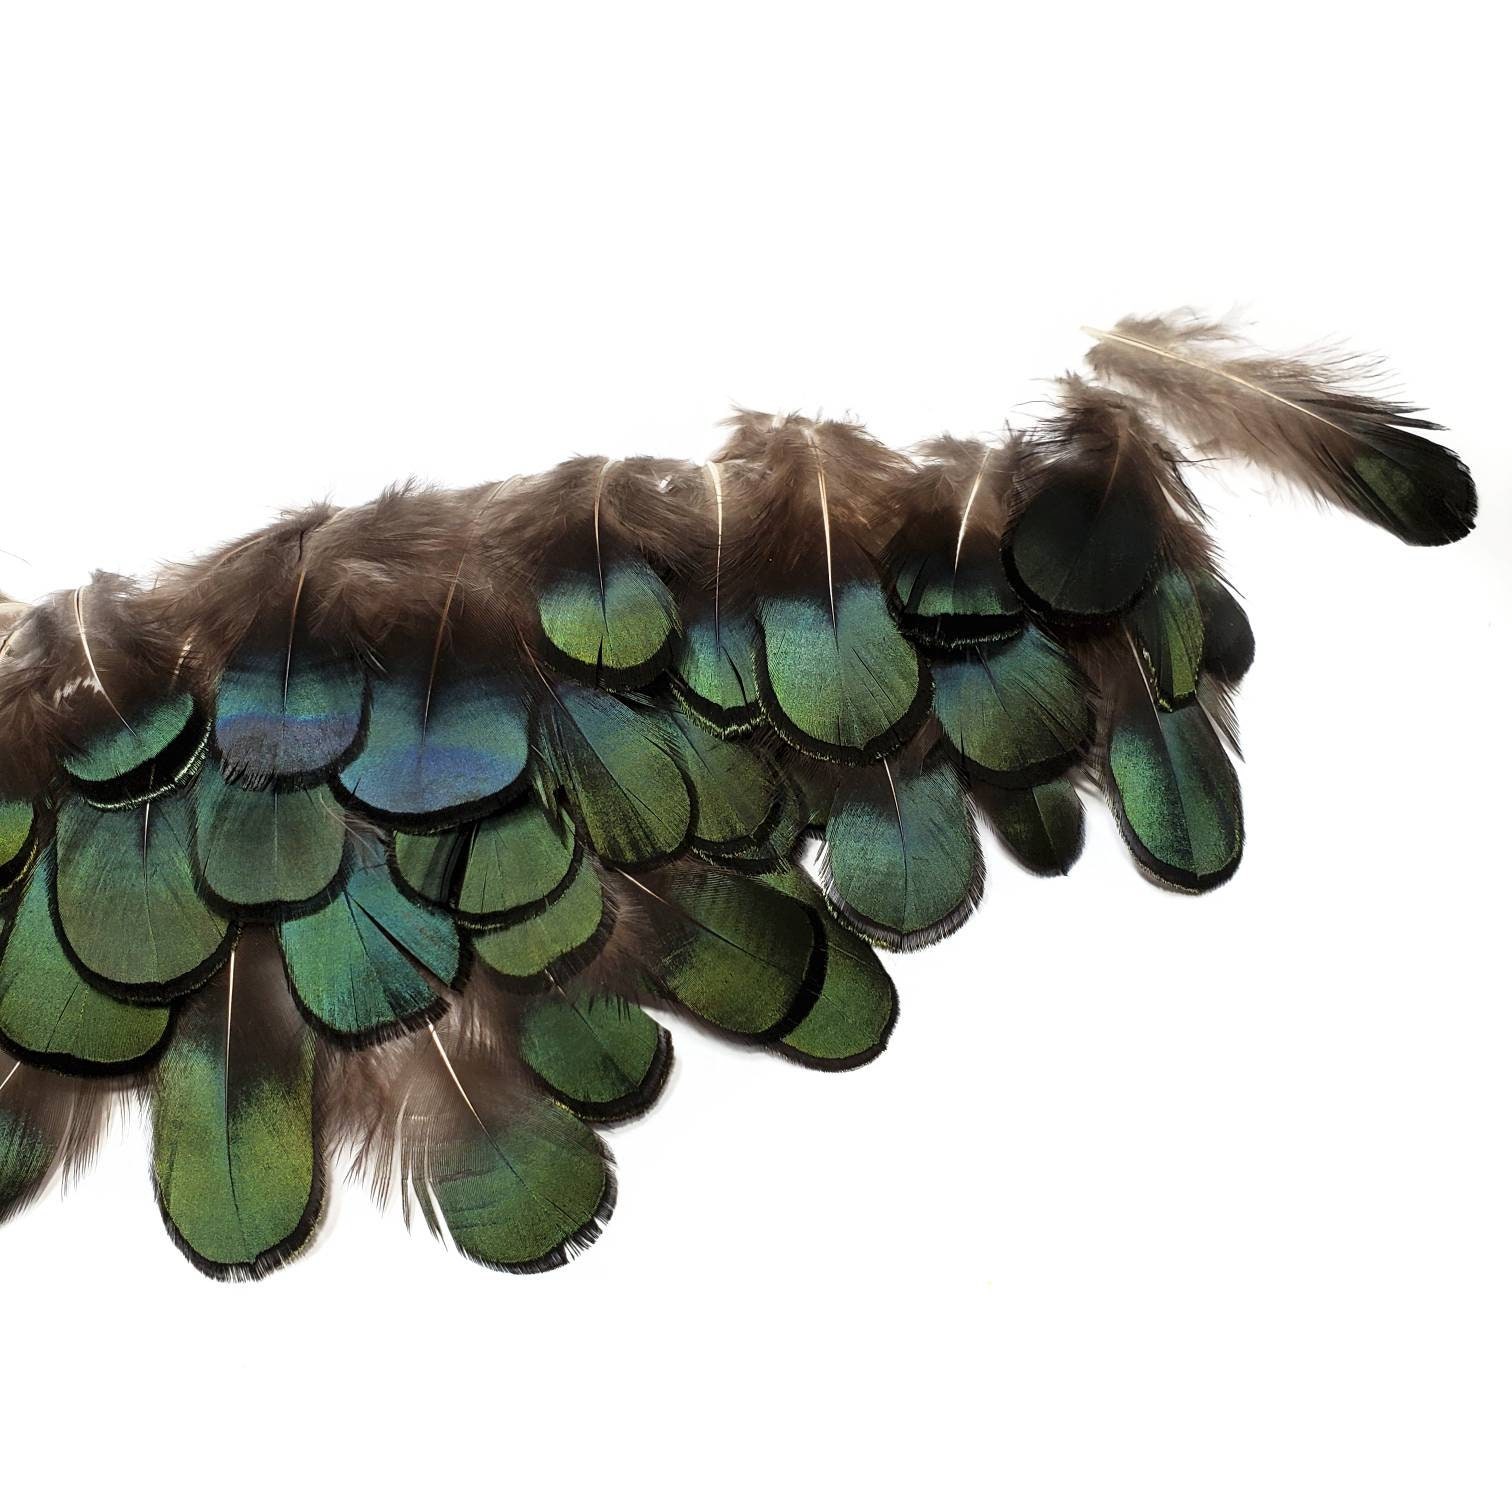 BULK 50pcs Lady Amherst Natural Green Pheasant Feathers DIY Art